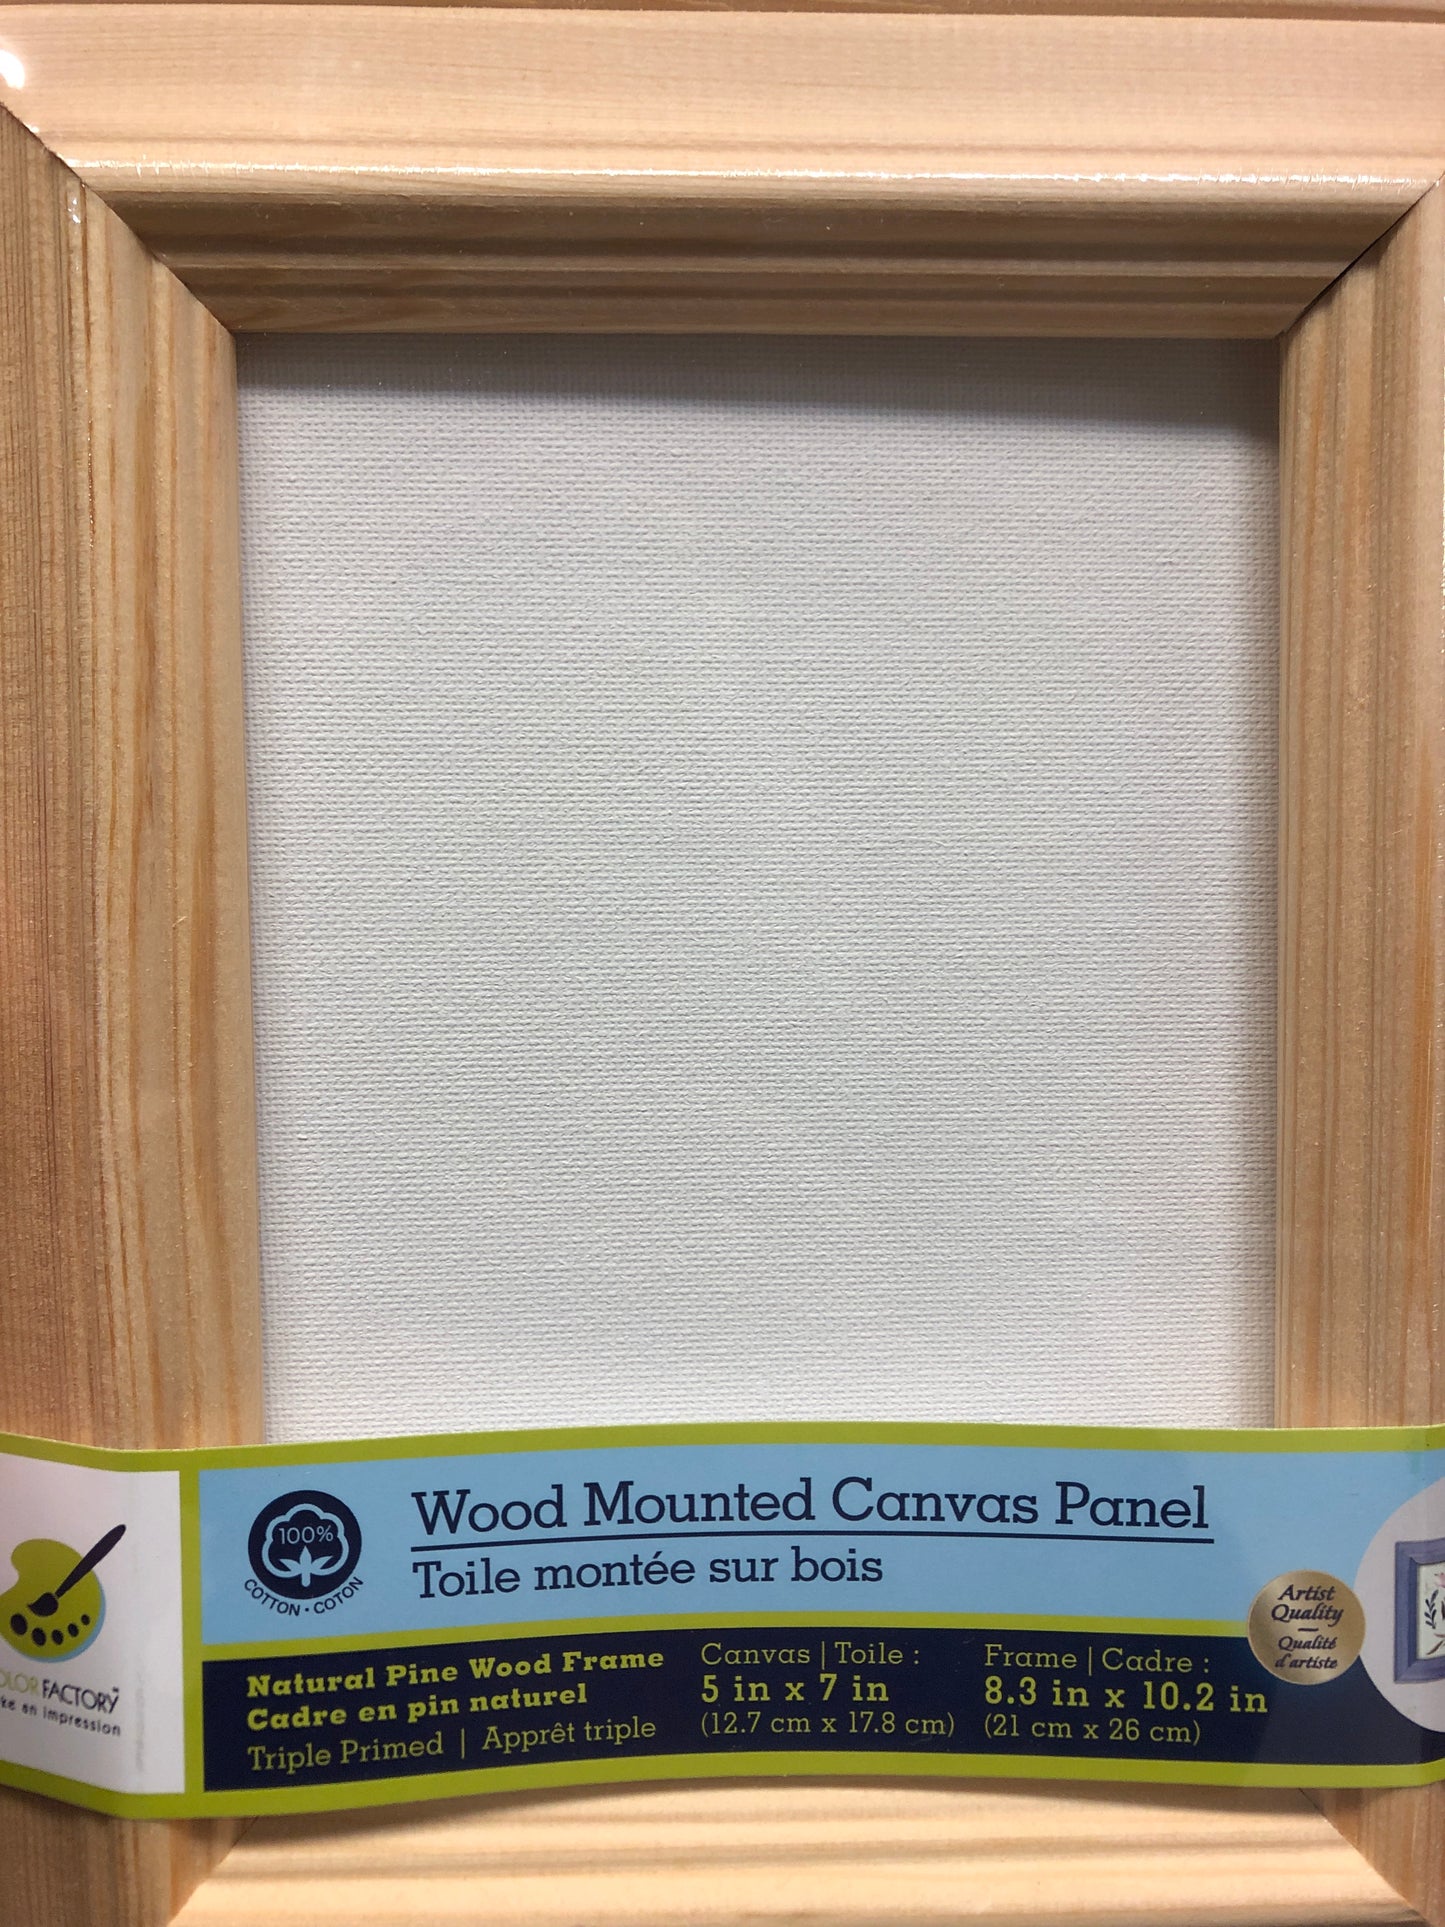 Wood Mounted Canvas Panel